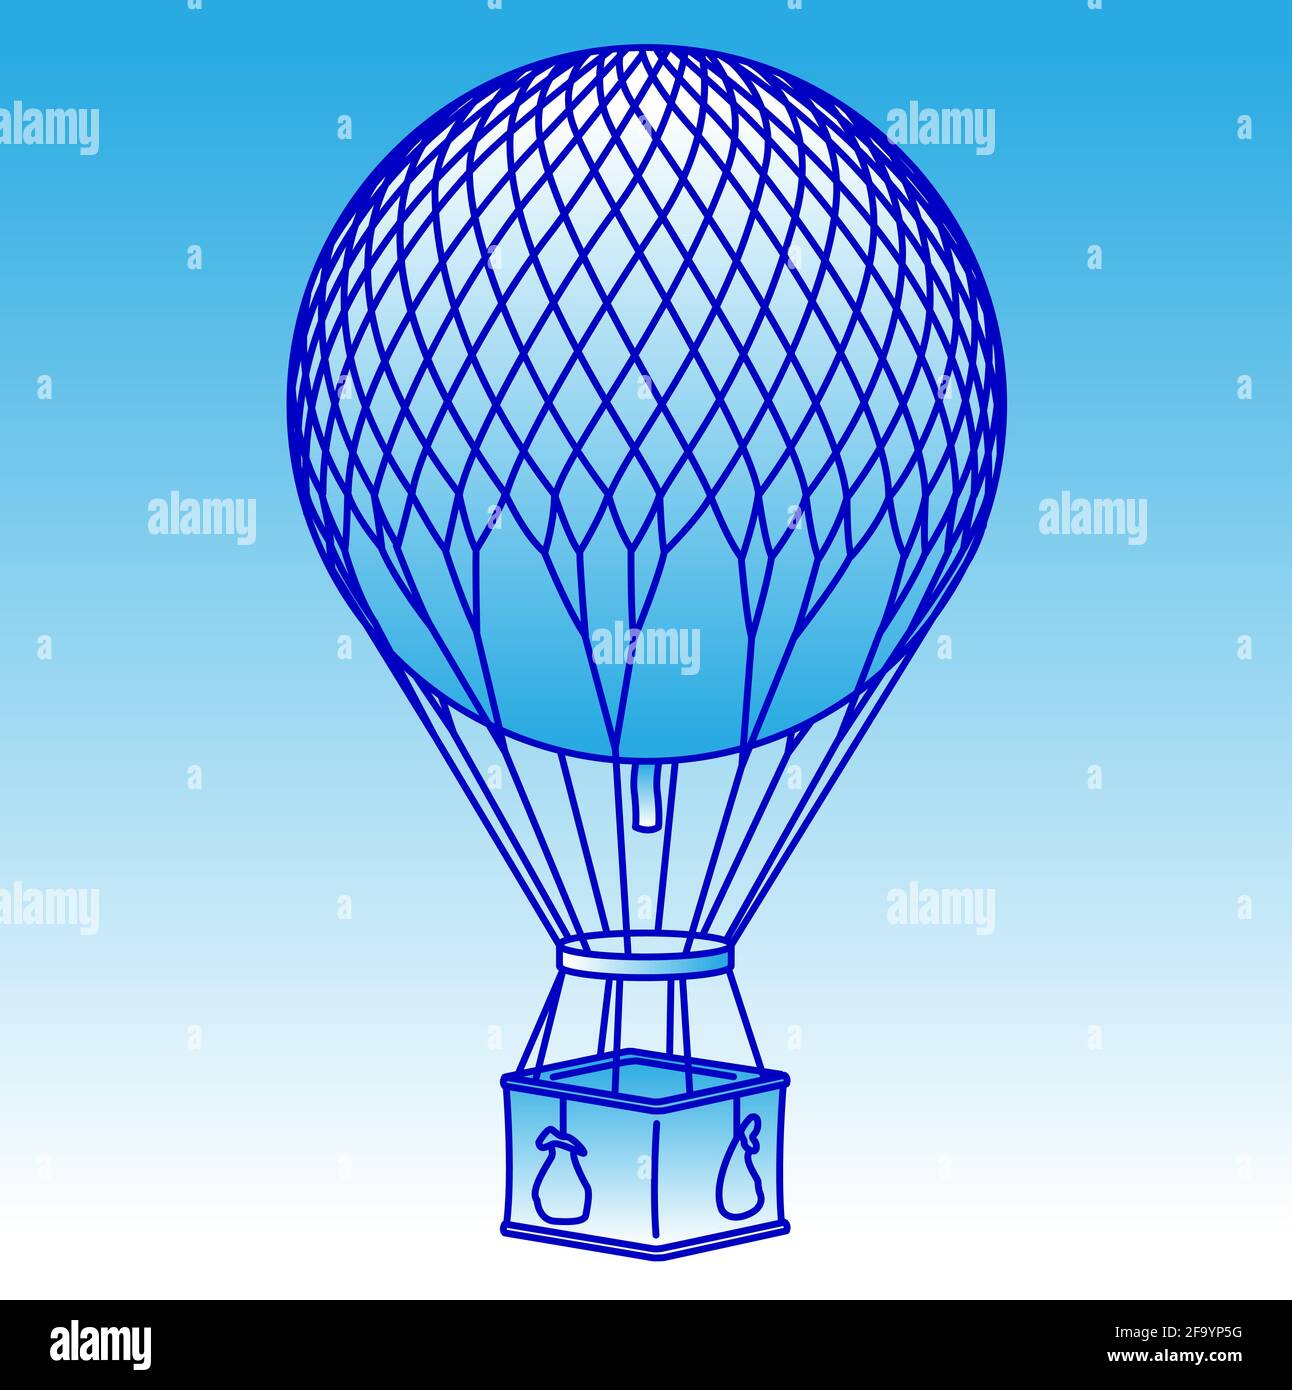 Bollatura ad aria calda, illustrazione vettoriale con sfumature di blu Illustrazione Vettoriale